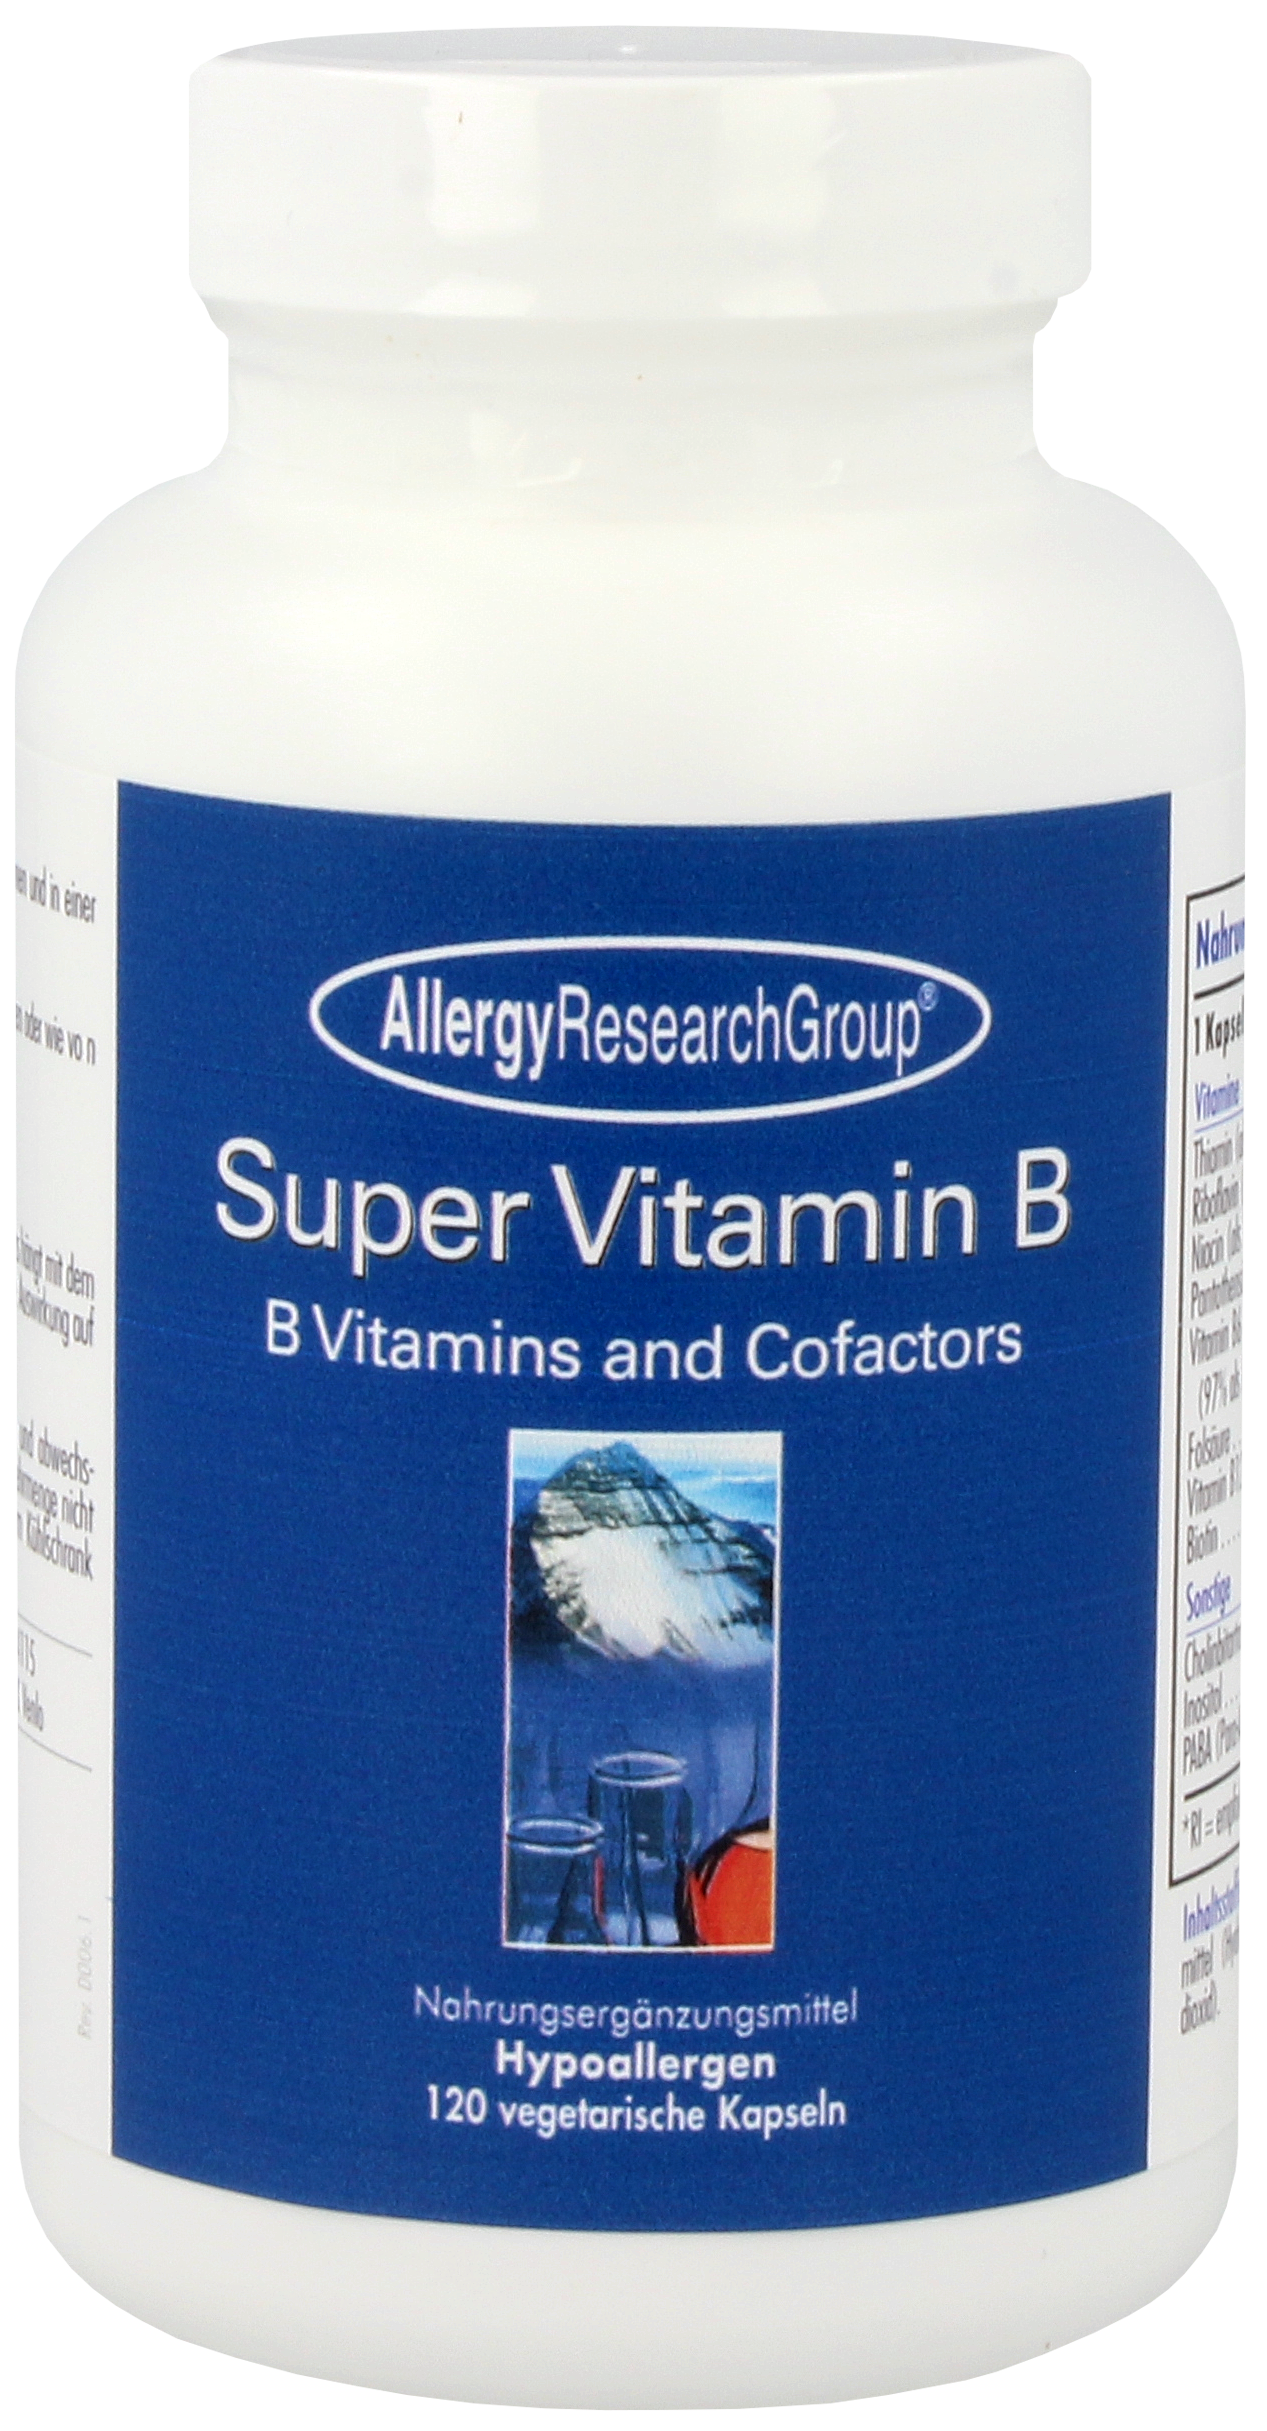 Super Vitamin B